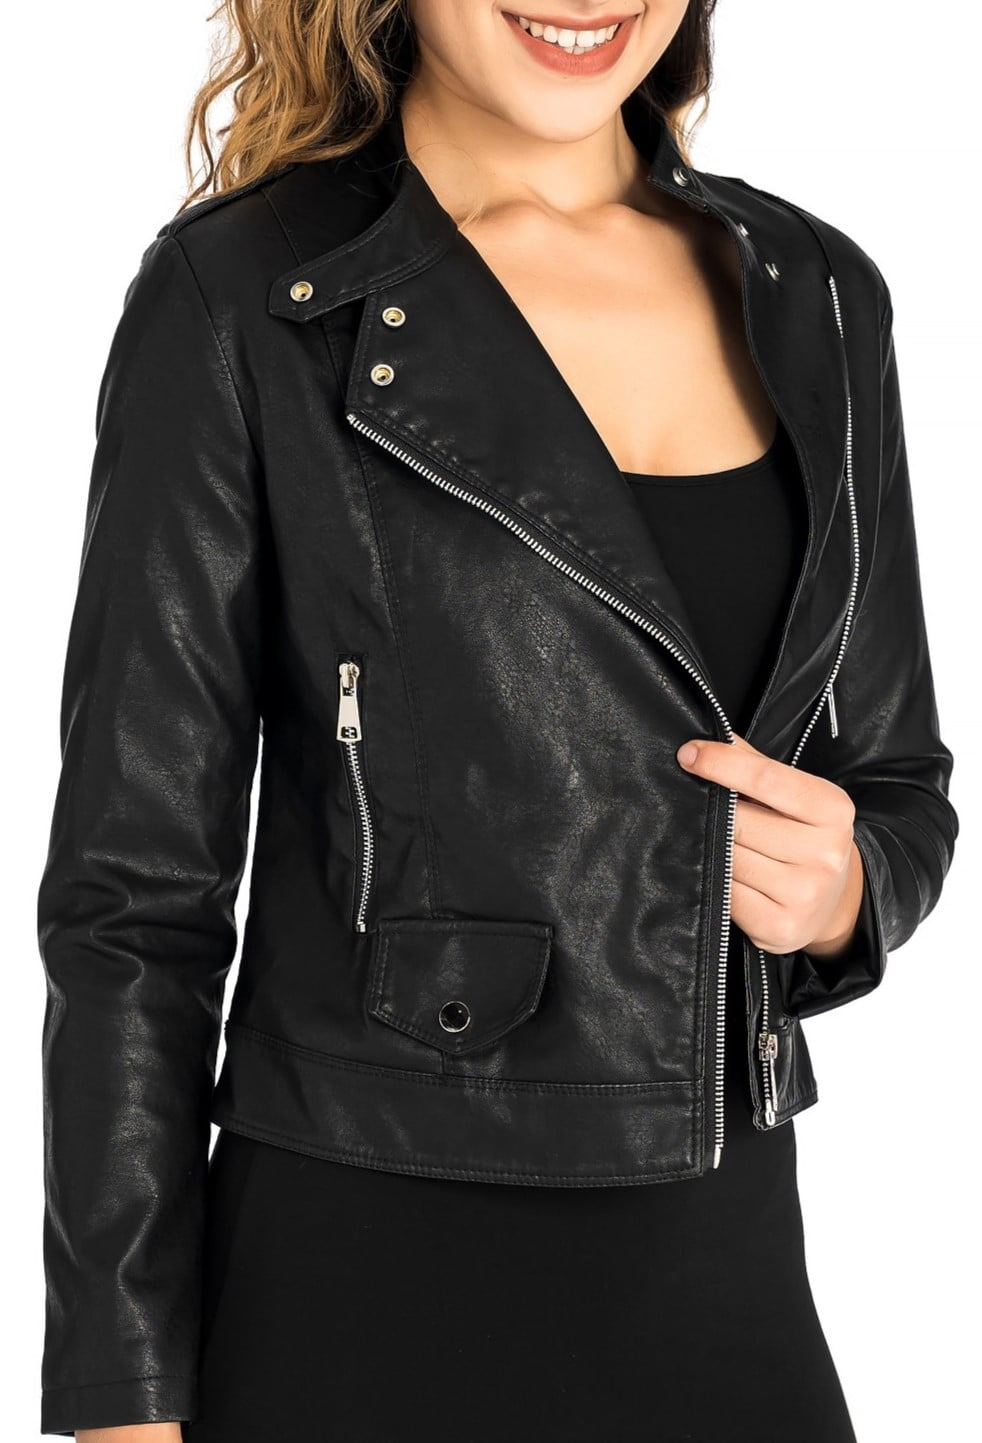 MECALA Womens PU Faux Leather Jacket Zip Up Moto Biker Short Jacket ...